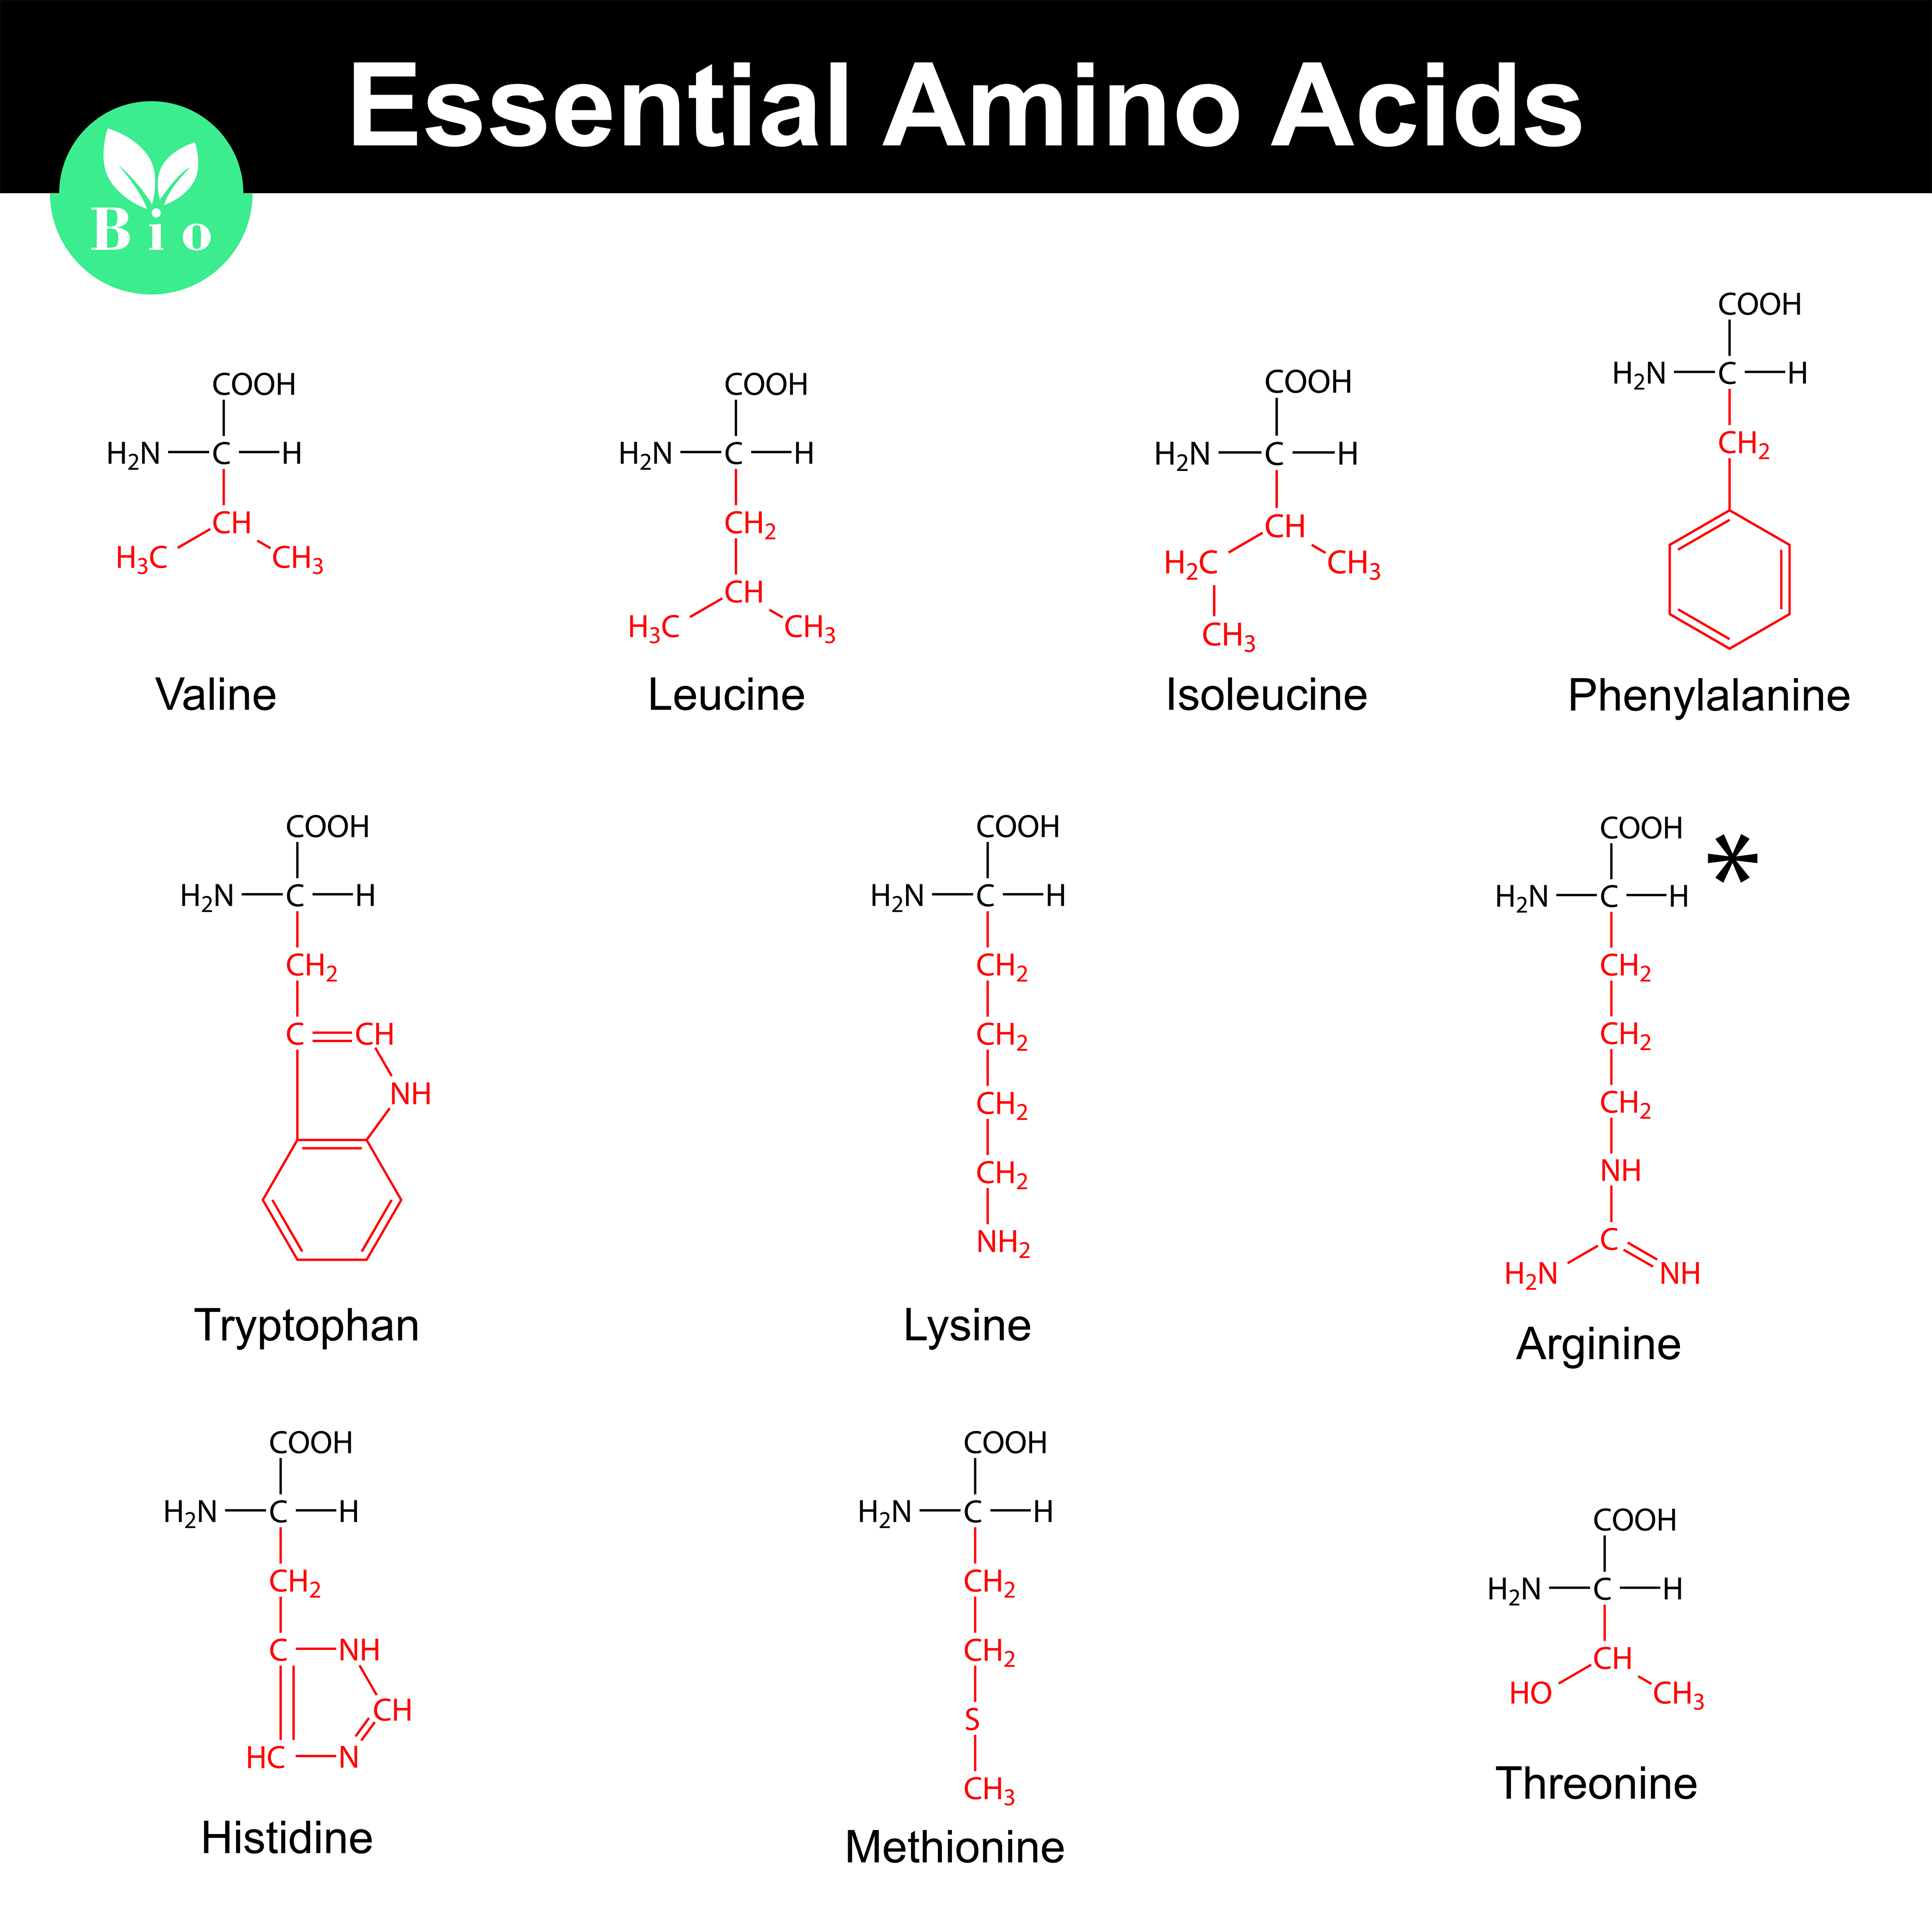 A set of essential amino acids. Arginine is derivative of biogenic amino acids, yet it is very important in organism's metabolism.